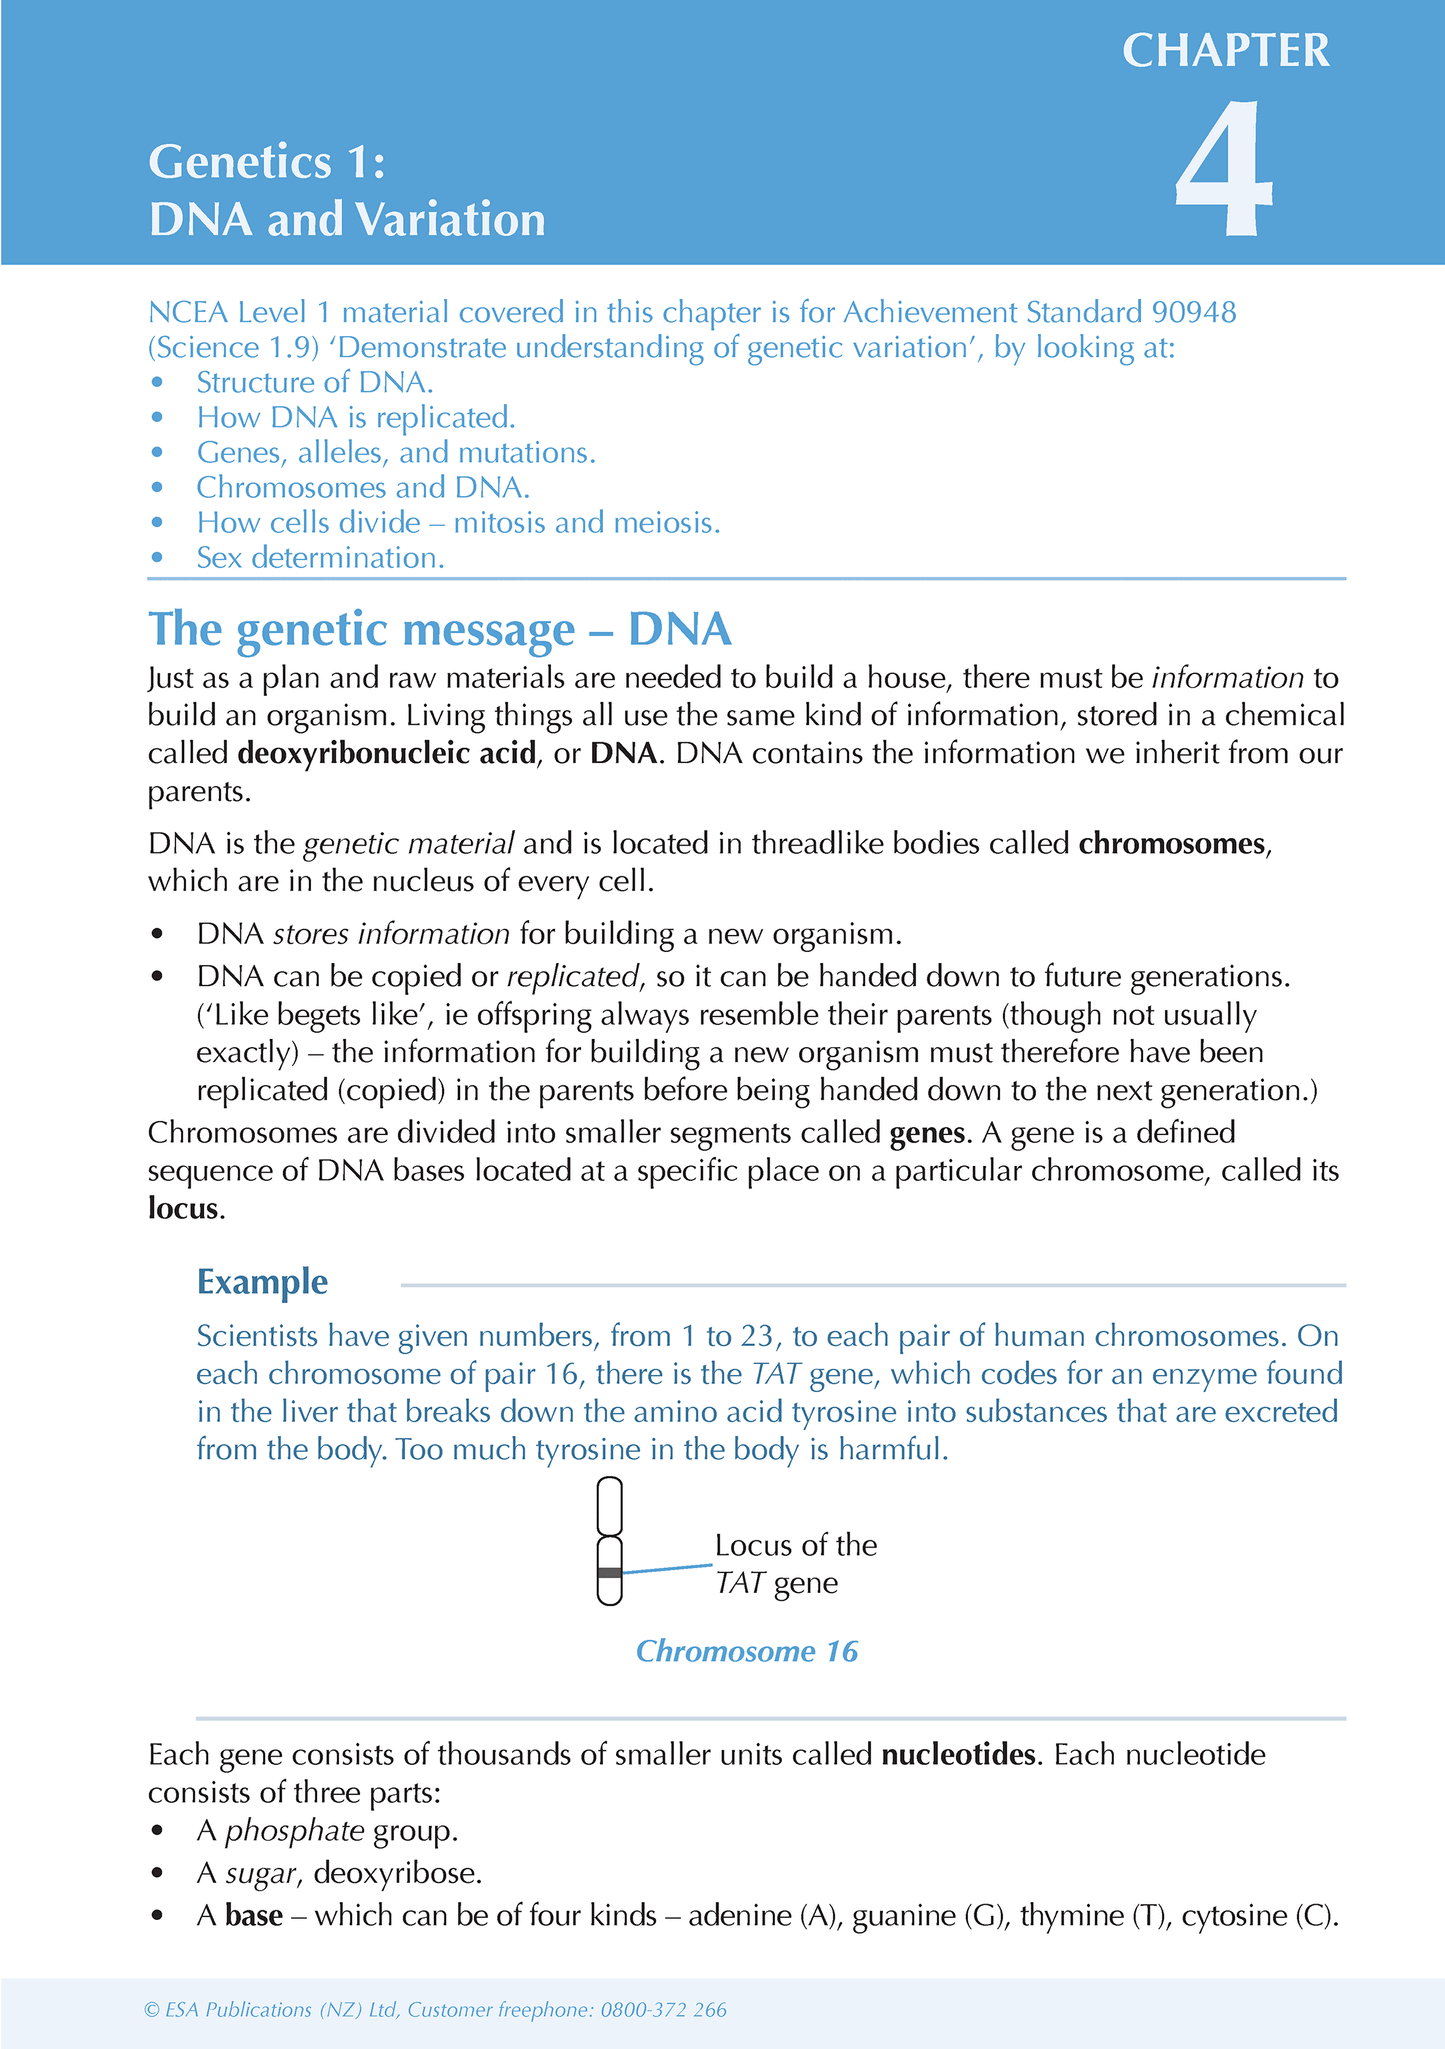 Level 1 Biology ESA Study Guide